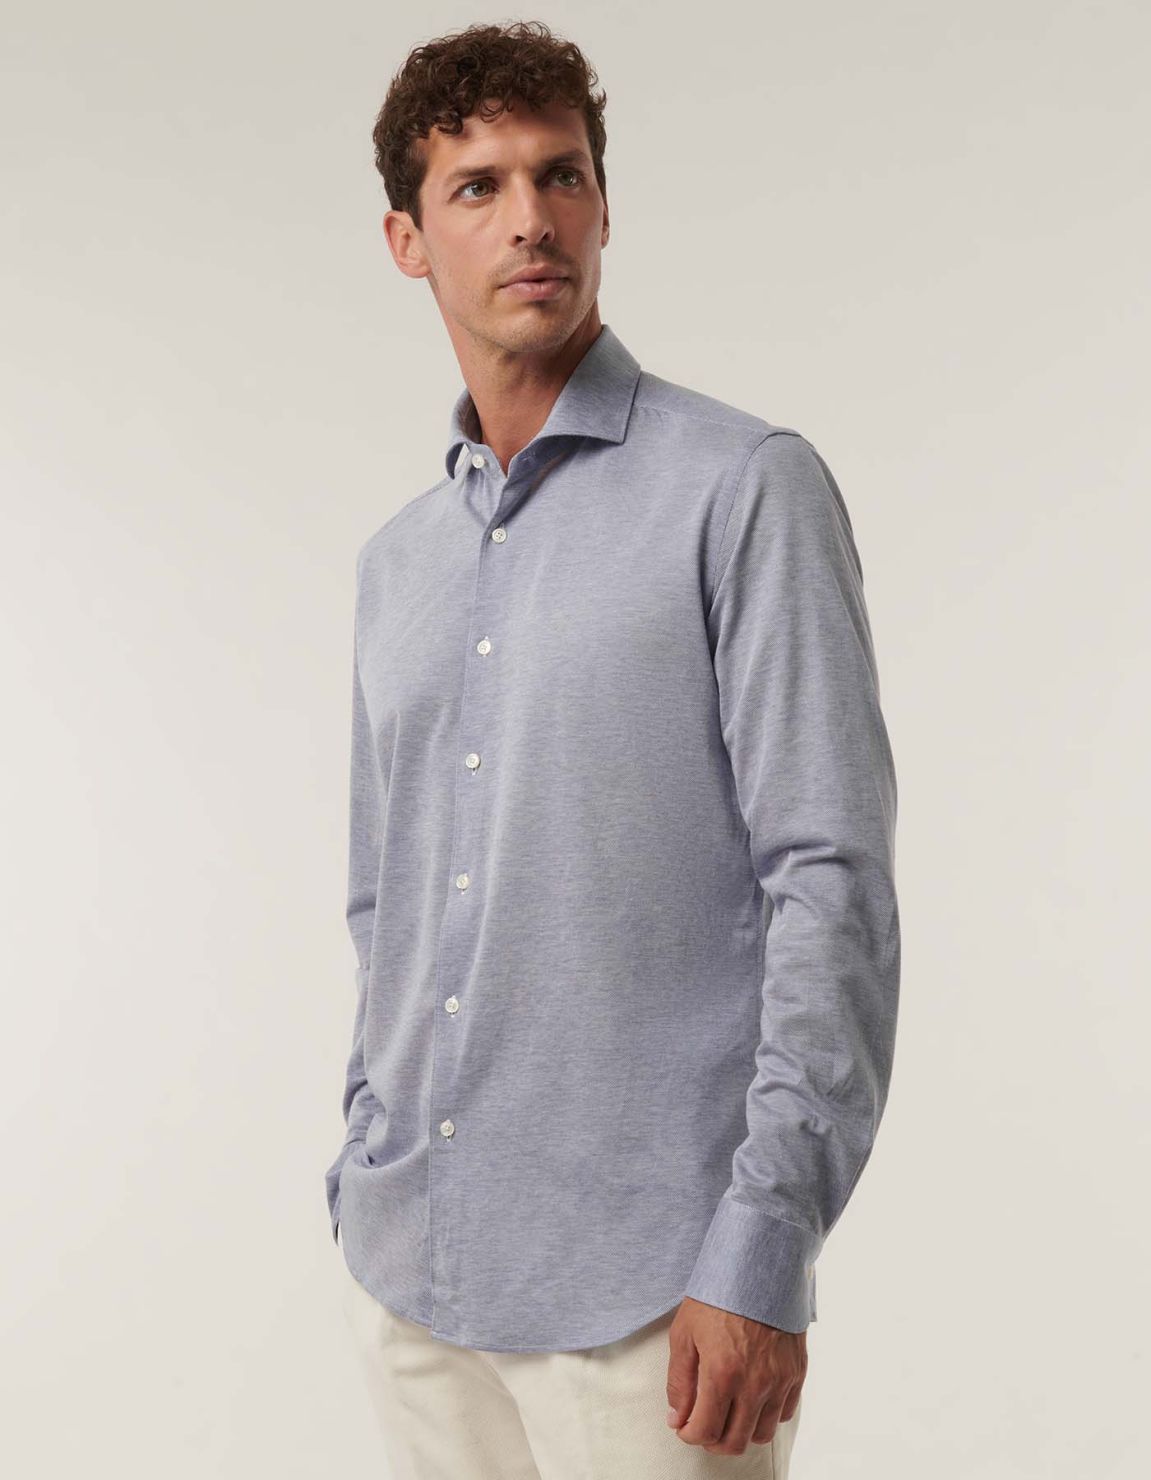 Light Blue Melange Jersey Solid colour Shirt Collar cutaway Tailor Custom Fit 5